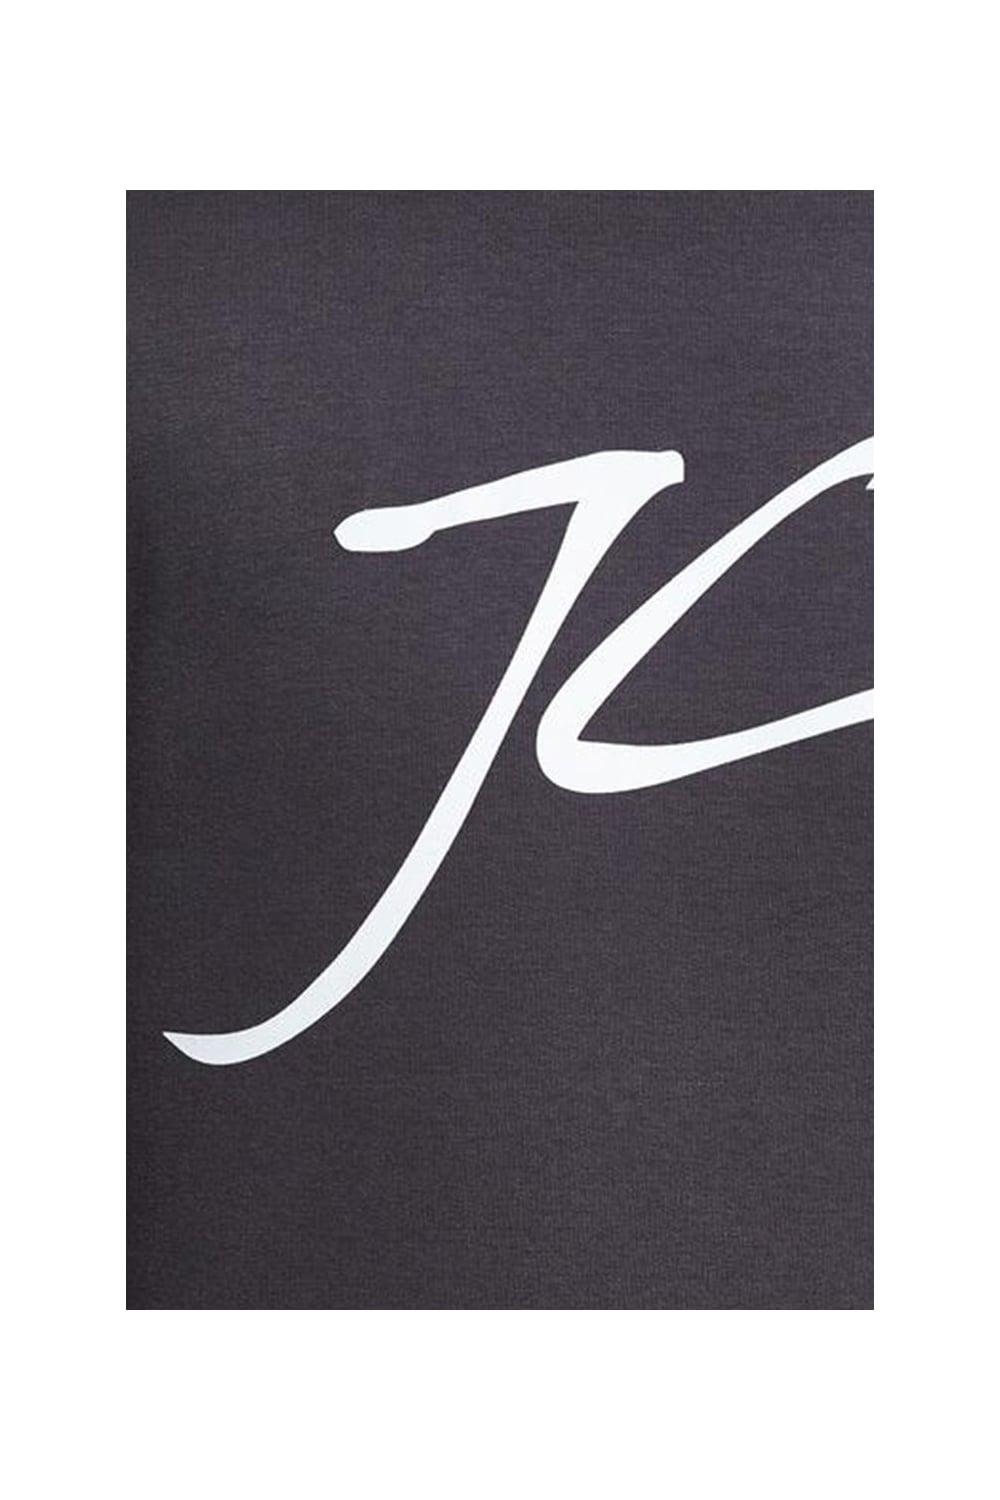 JC Logo - Jameson Carter JC Logo Sweatshirt